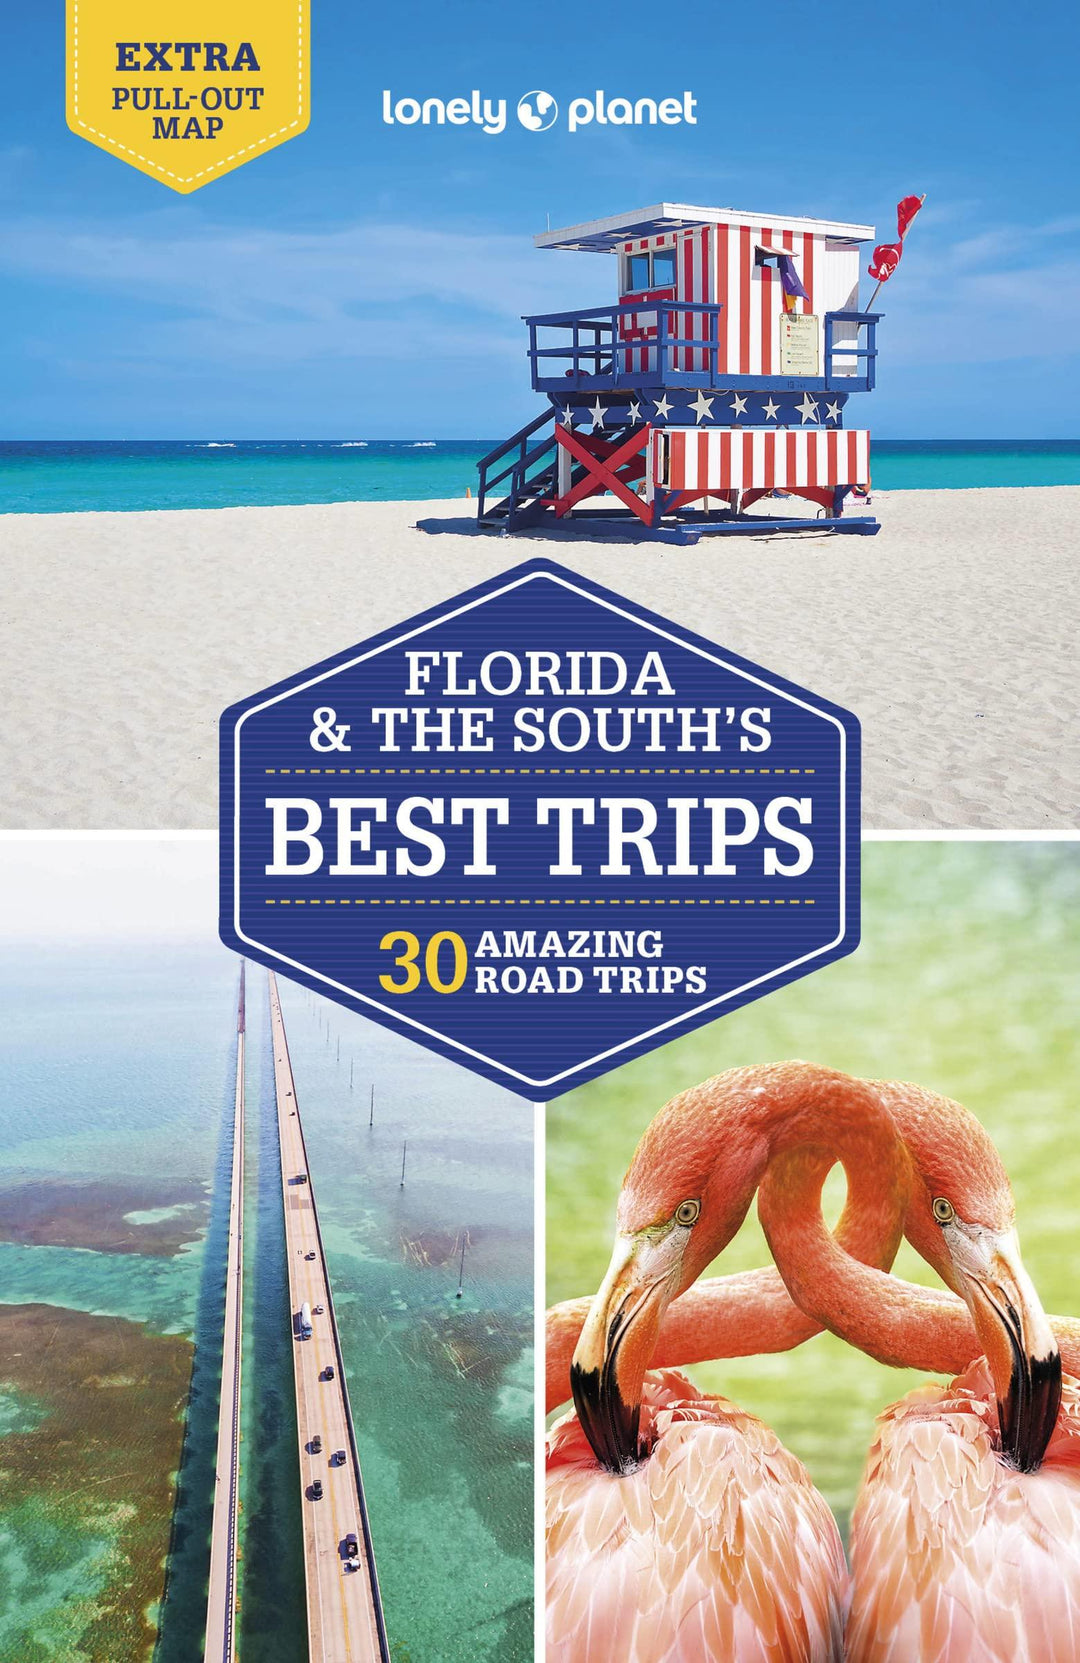 Guide de voyage (en anglais) - Florida & the South's best trips | Lonely Planet guide de voyage Lonely Planet 